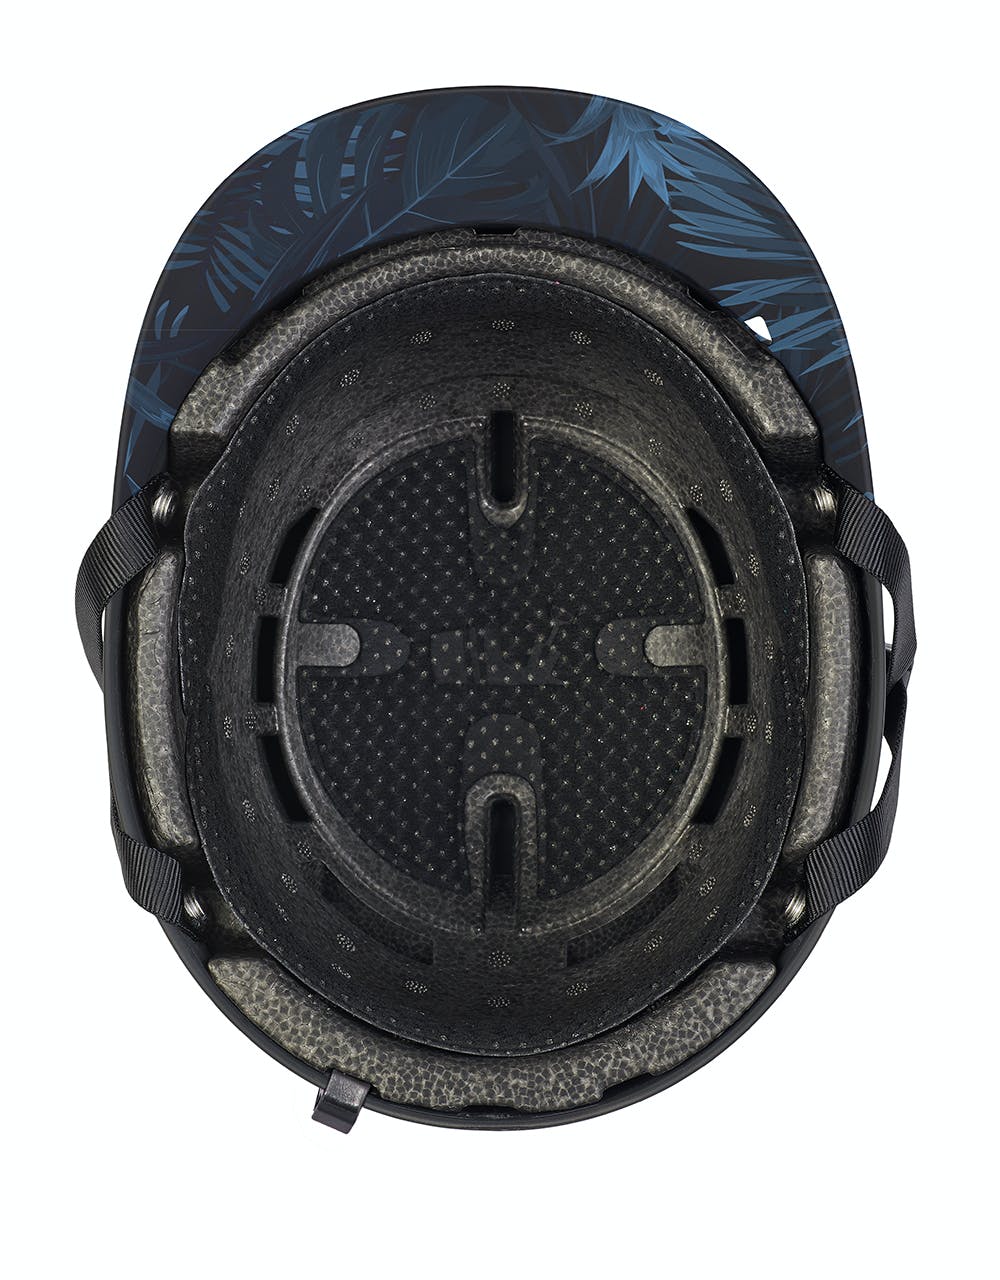 Sandbox Classic 2.0 2020 Snowboard Helmet - Tropic Storm